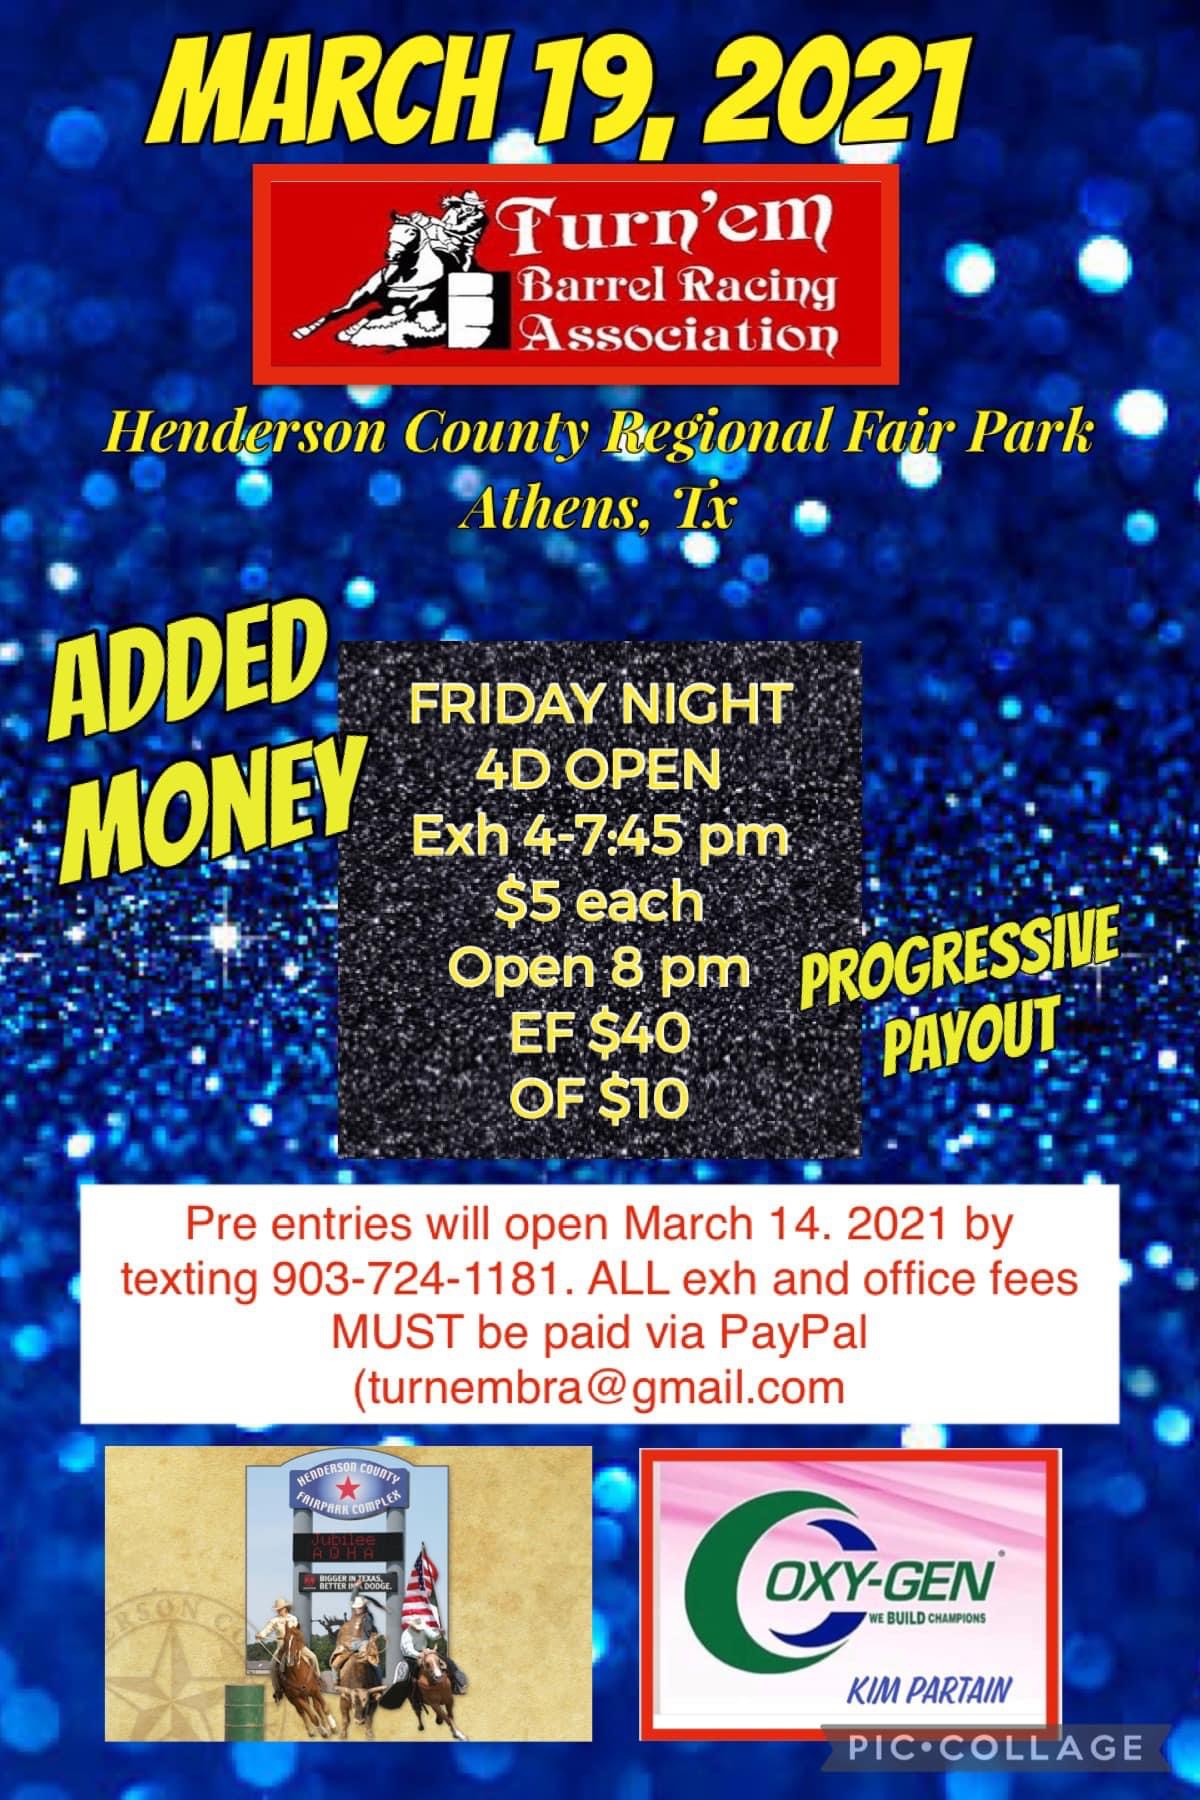 Turn’em Barrel Racing Association • Friday Night Open 4D